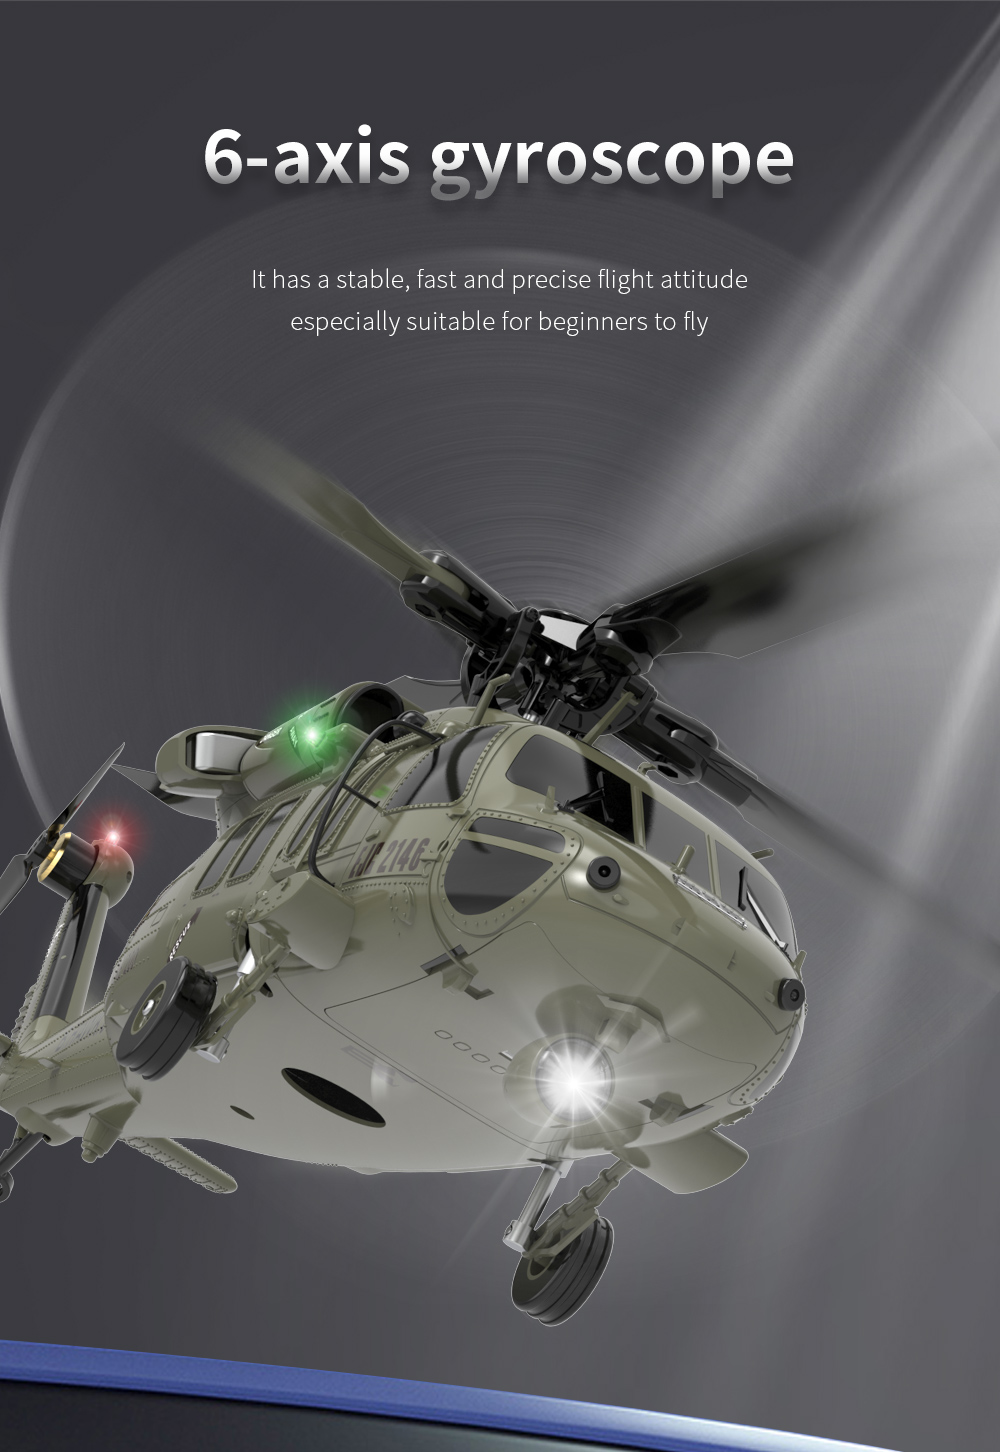 UH-60 Black Hawk RC Military Helicopter (MH-47 Chinook, VH-3D Sea KingVH-3D Sea King, UH-72A LakotaUH-72A Lakota)